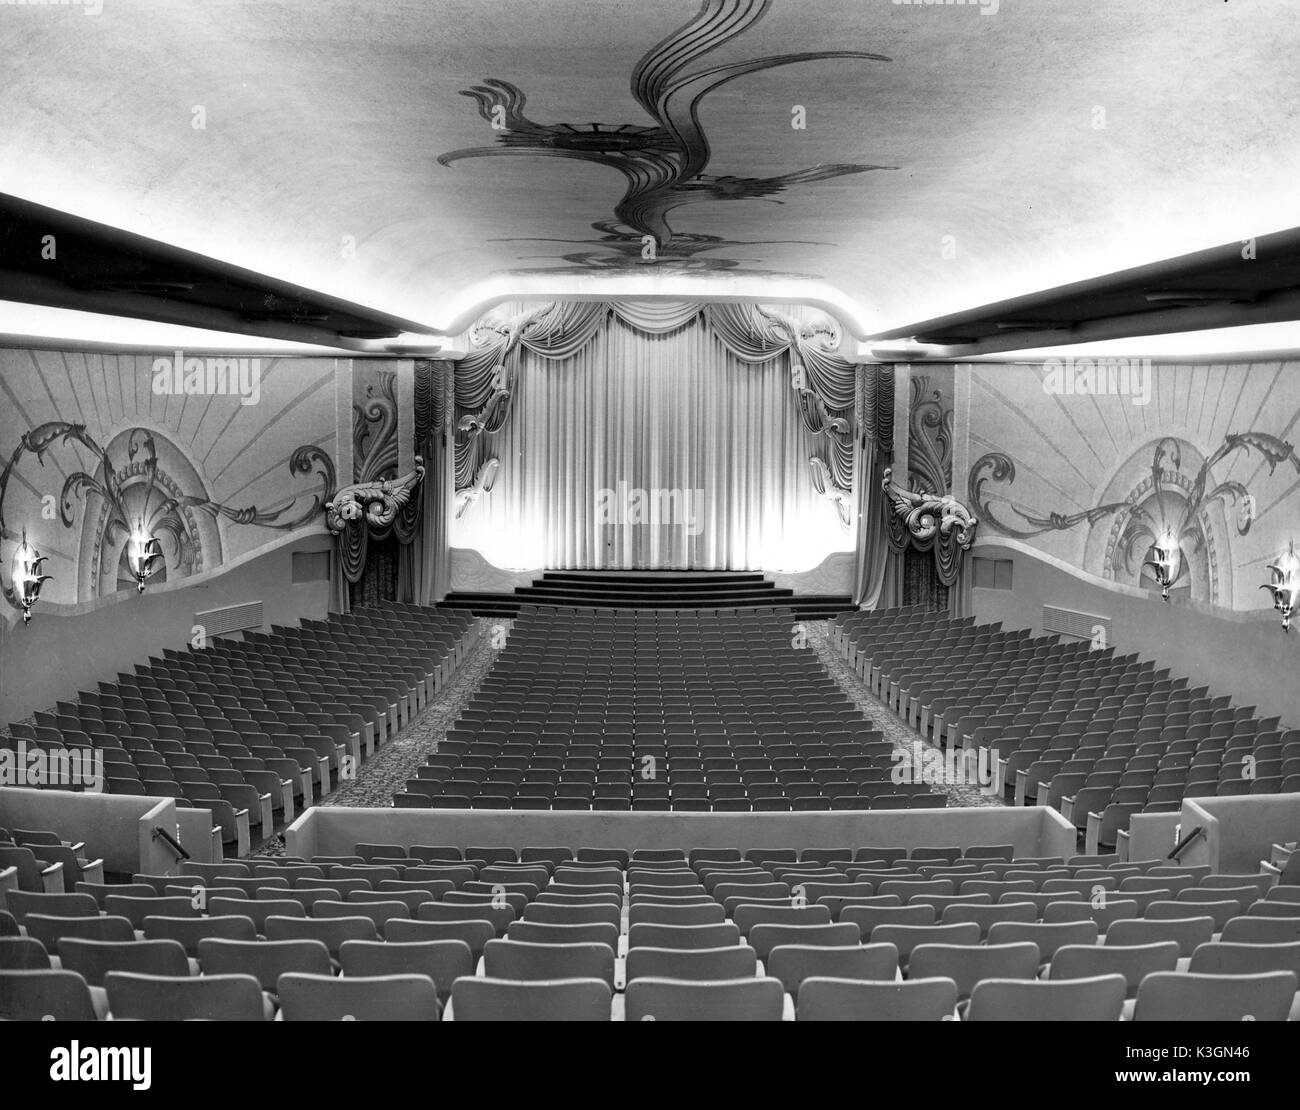 LOYOLA CINEMA, LOS ANGELES USE IN 1947 Stock Photo